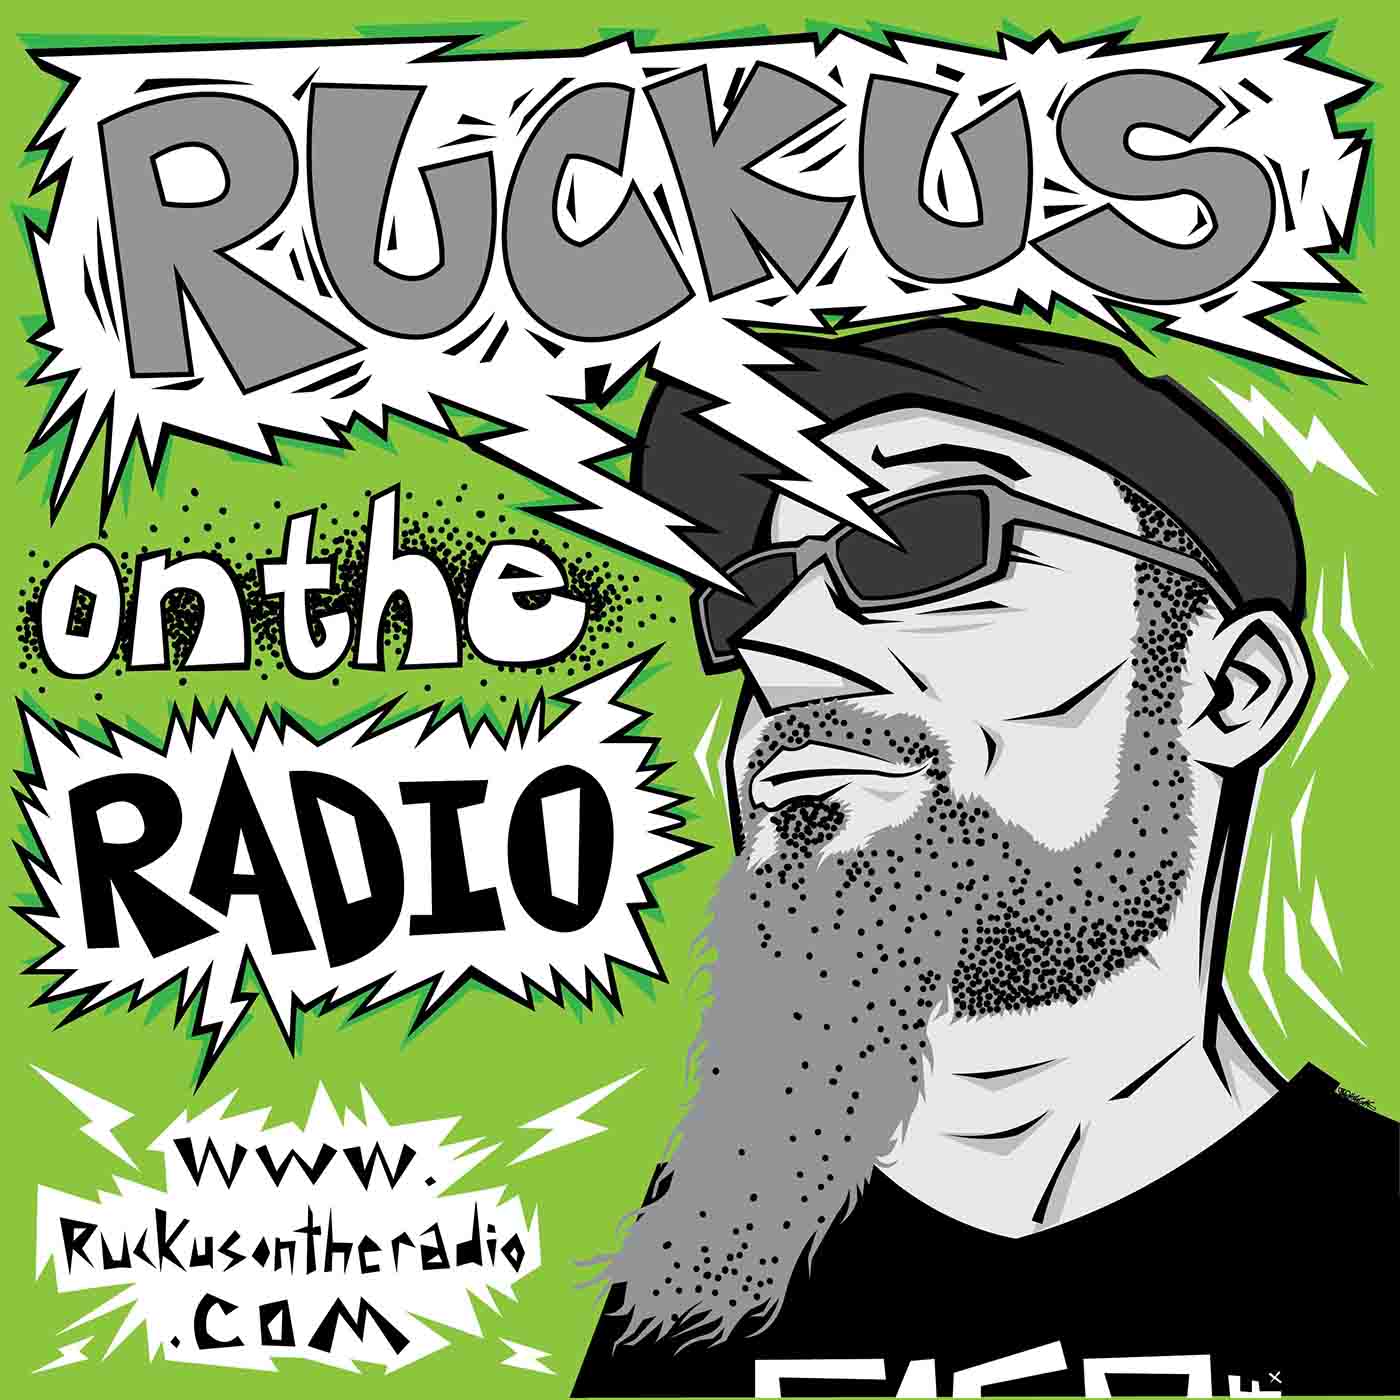 Ruckus On The Radio Podbay